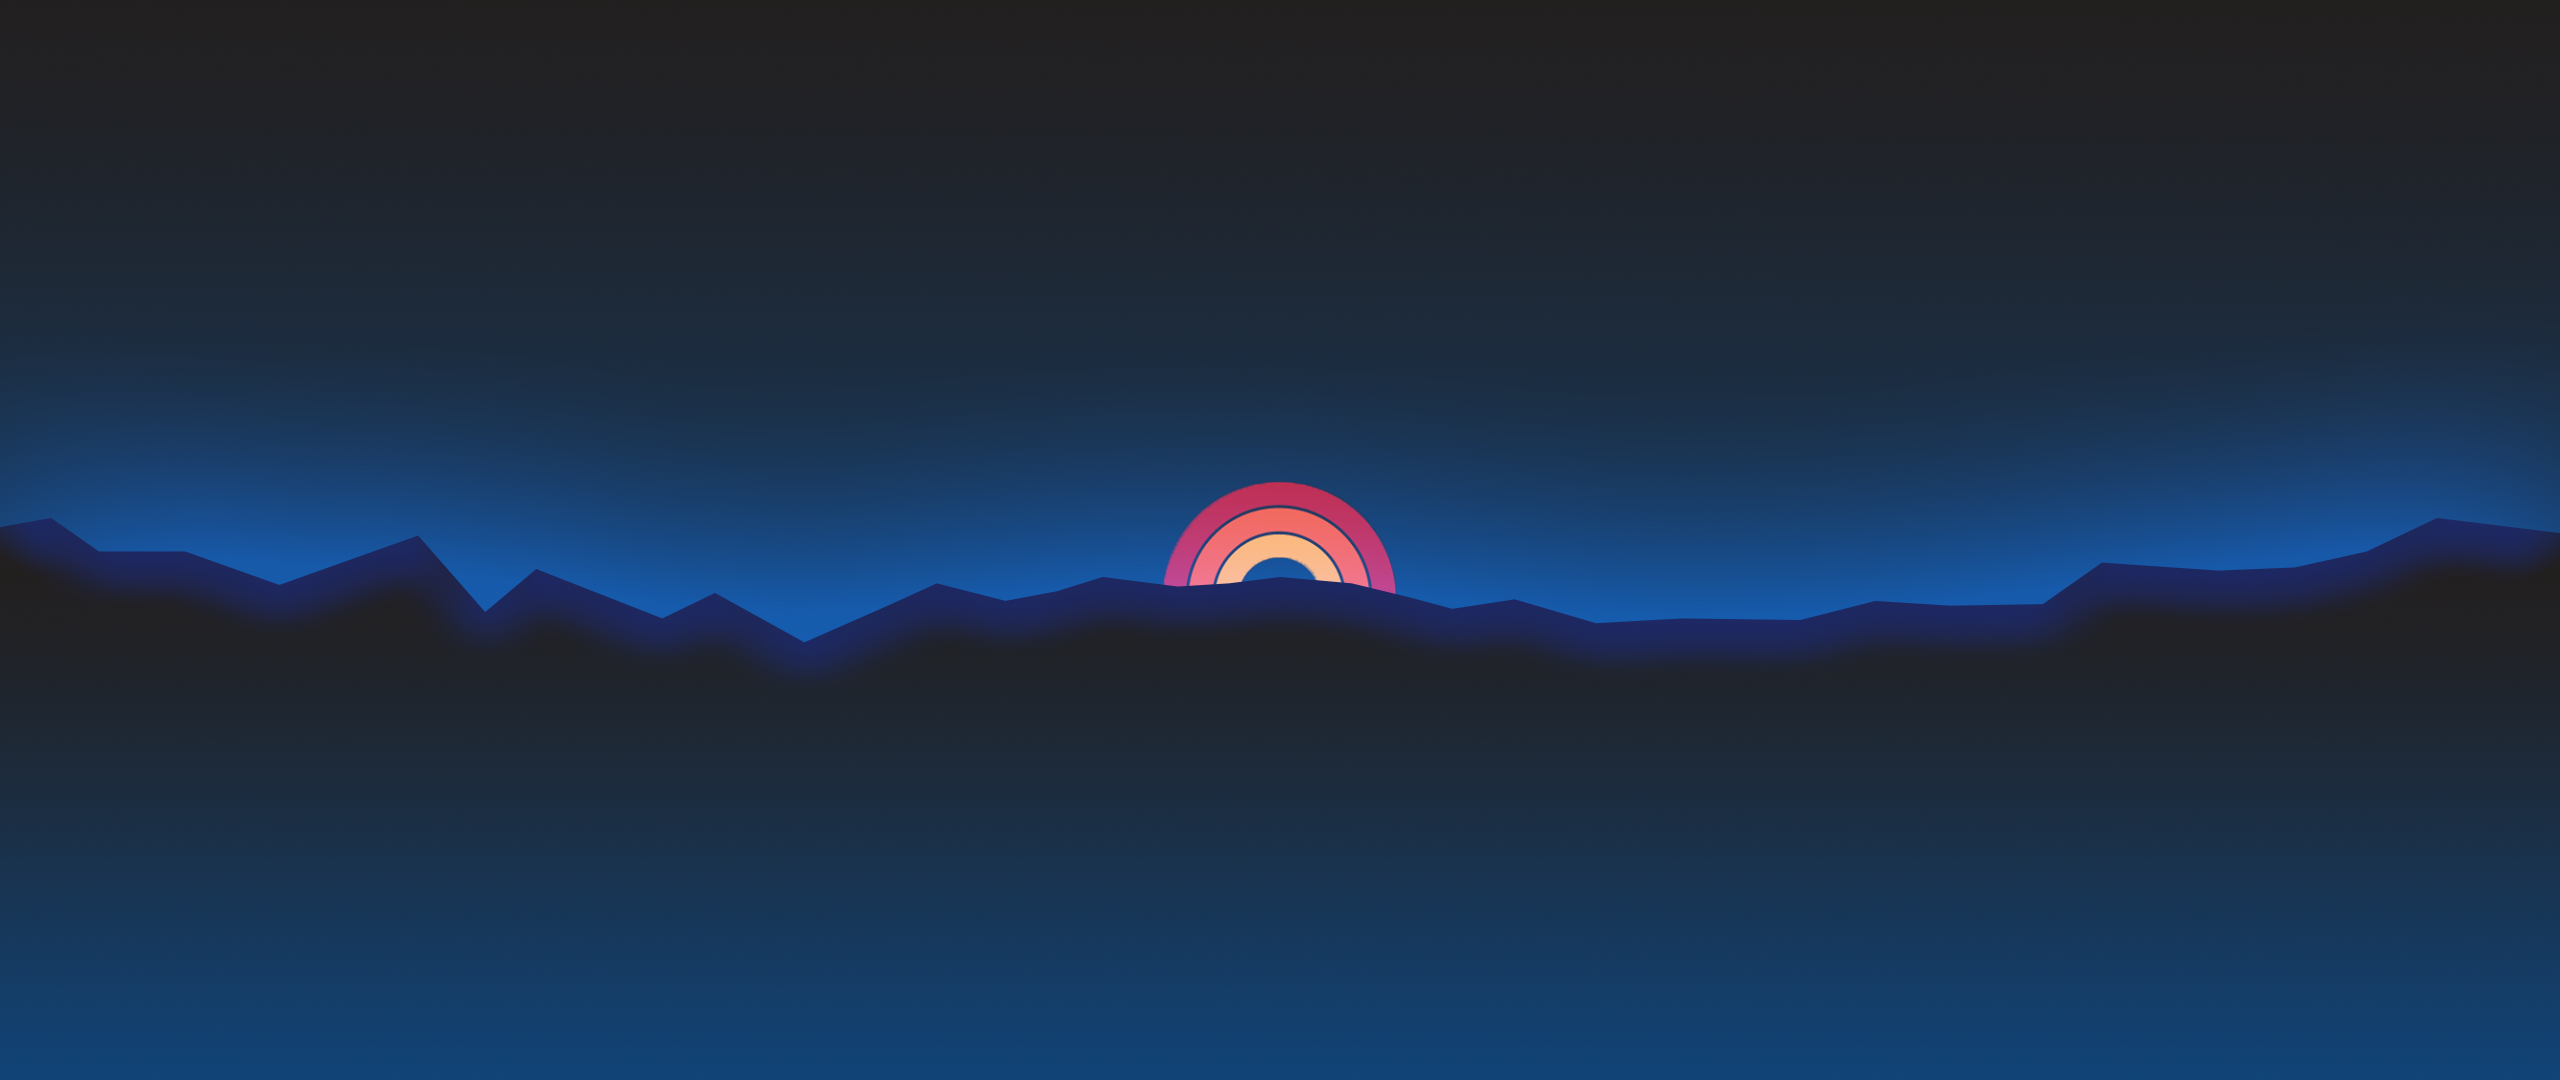 General 2560x1080 minimalism retro style Com Truise mountains landscape ultrawide simple background neon digital art sunset